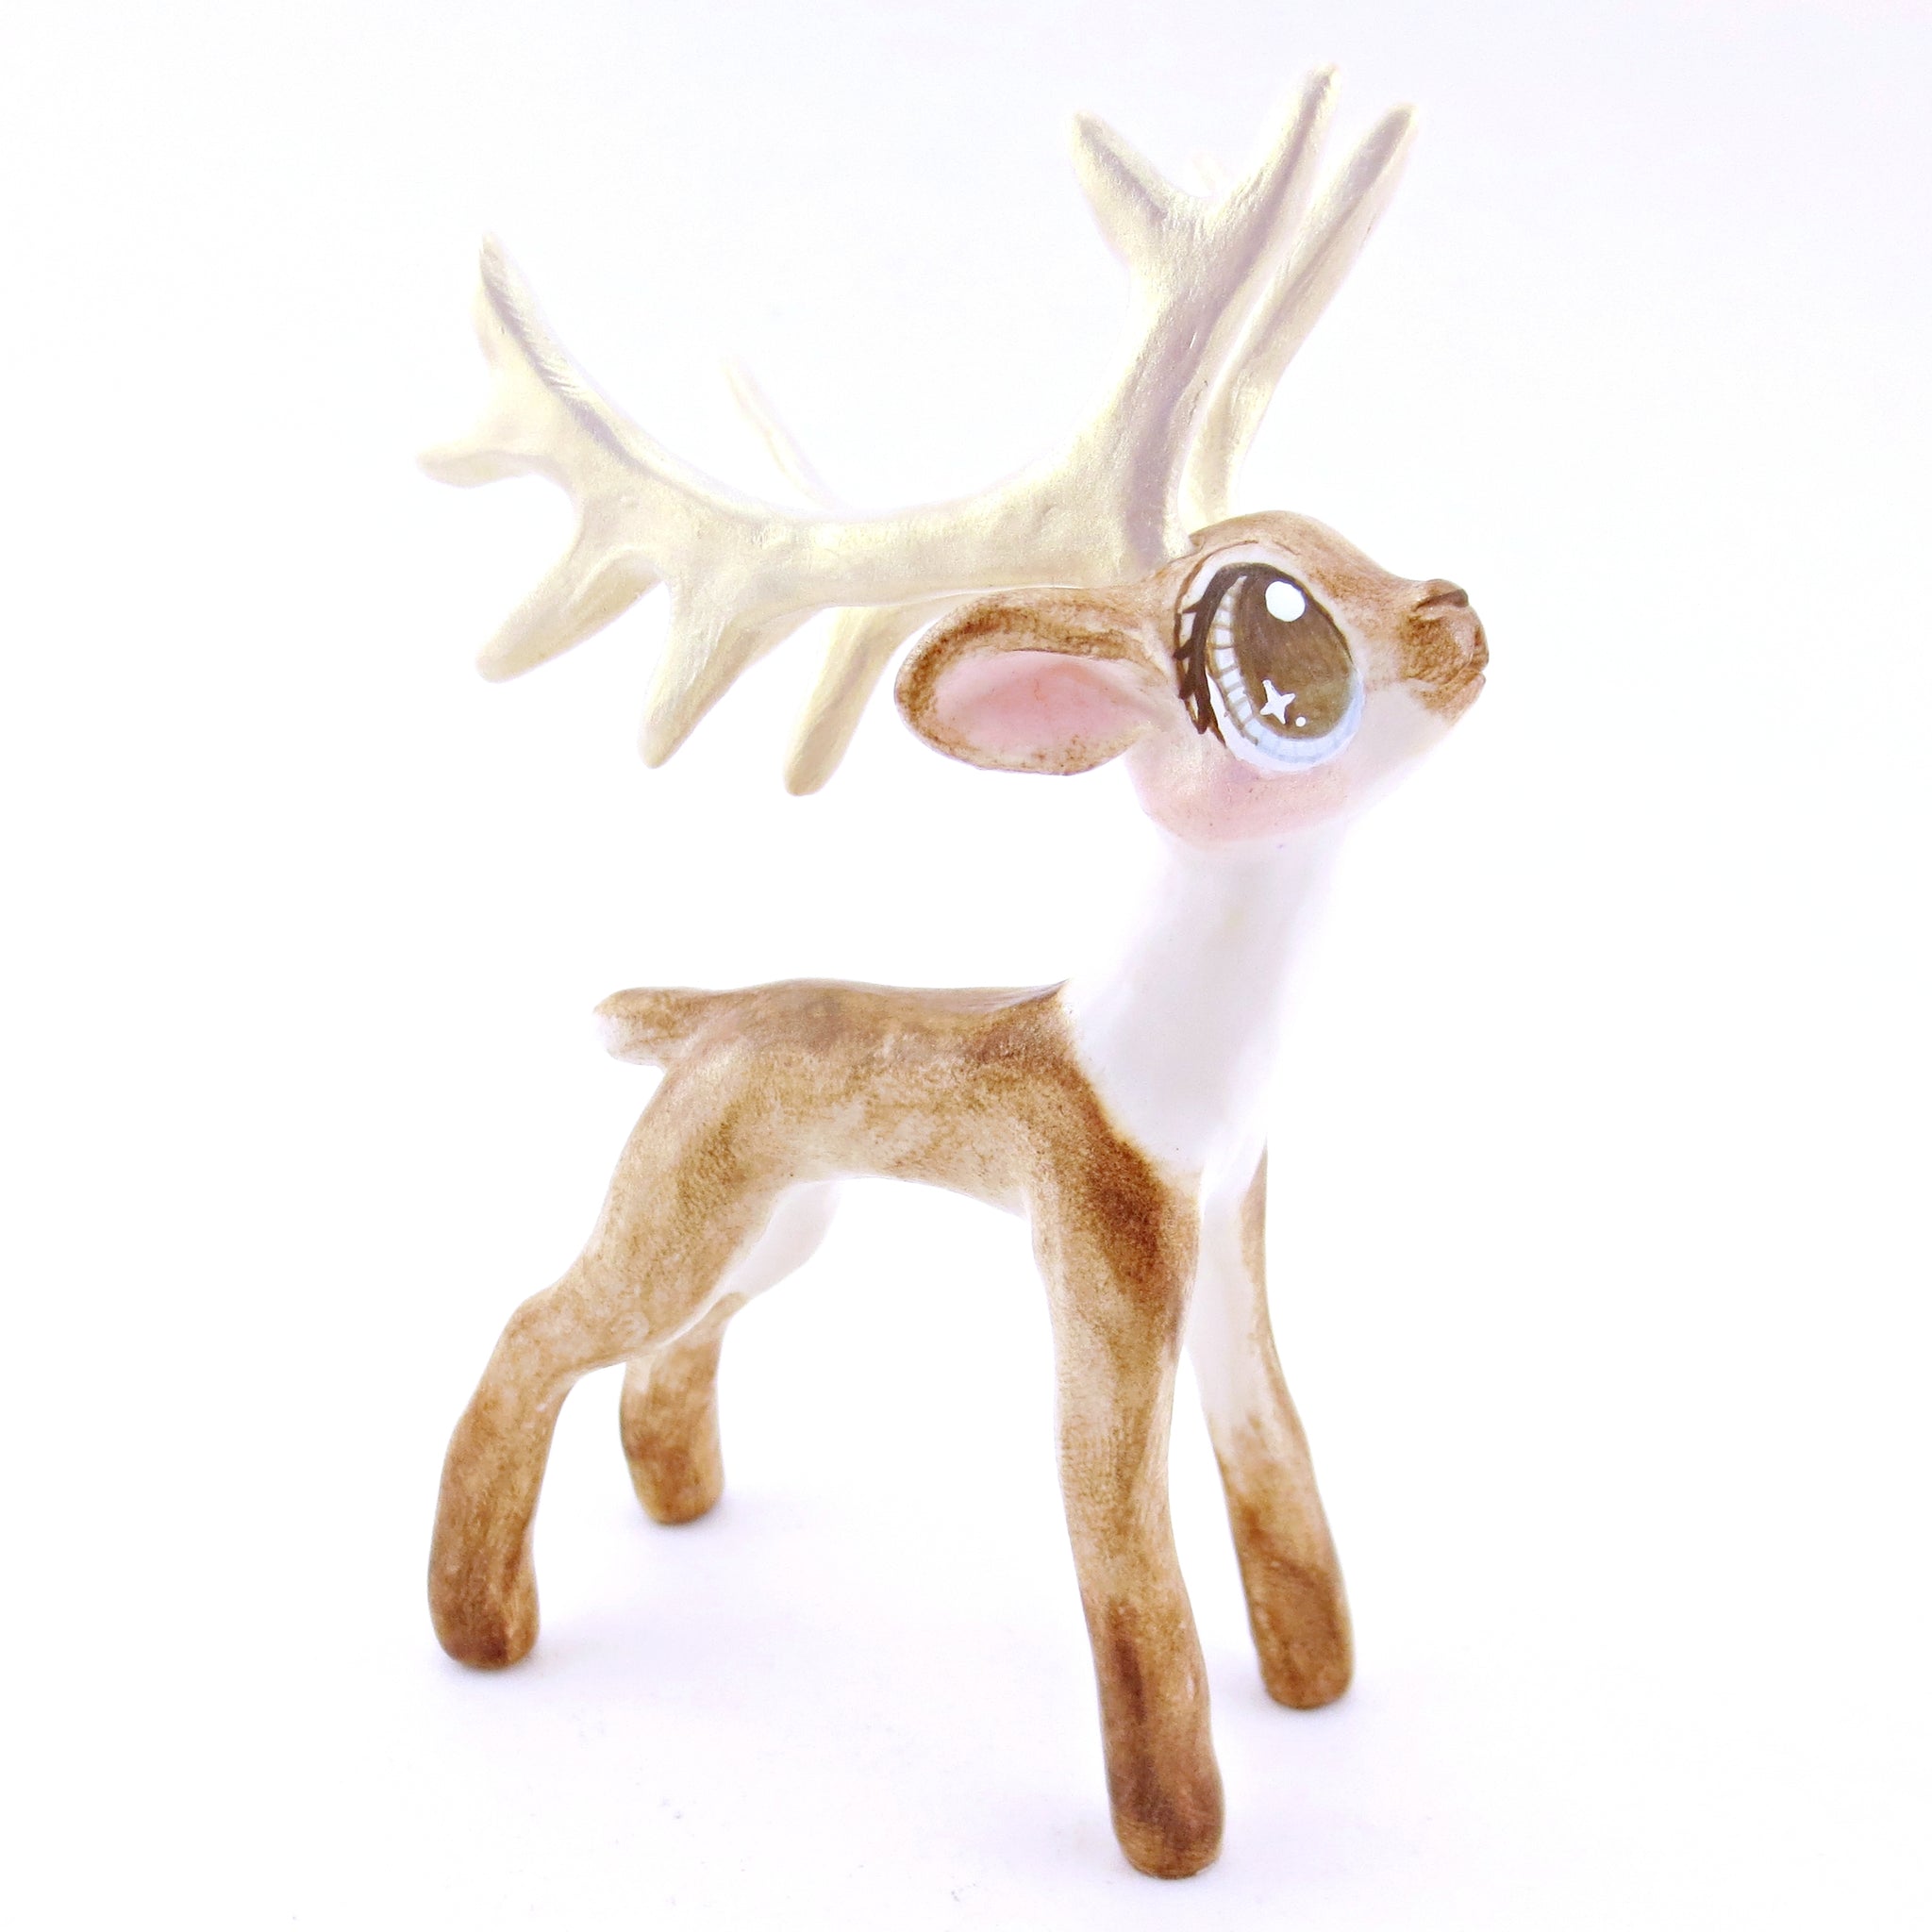 Comet - Big-Antlered Reindeer Figurine - Polymer Clay Christmas Animals